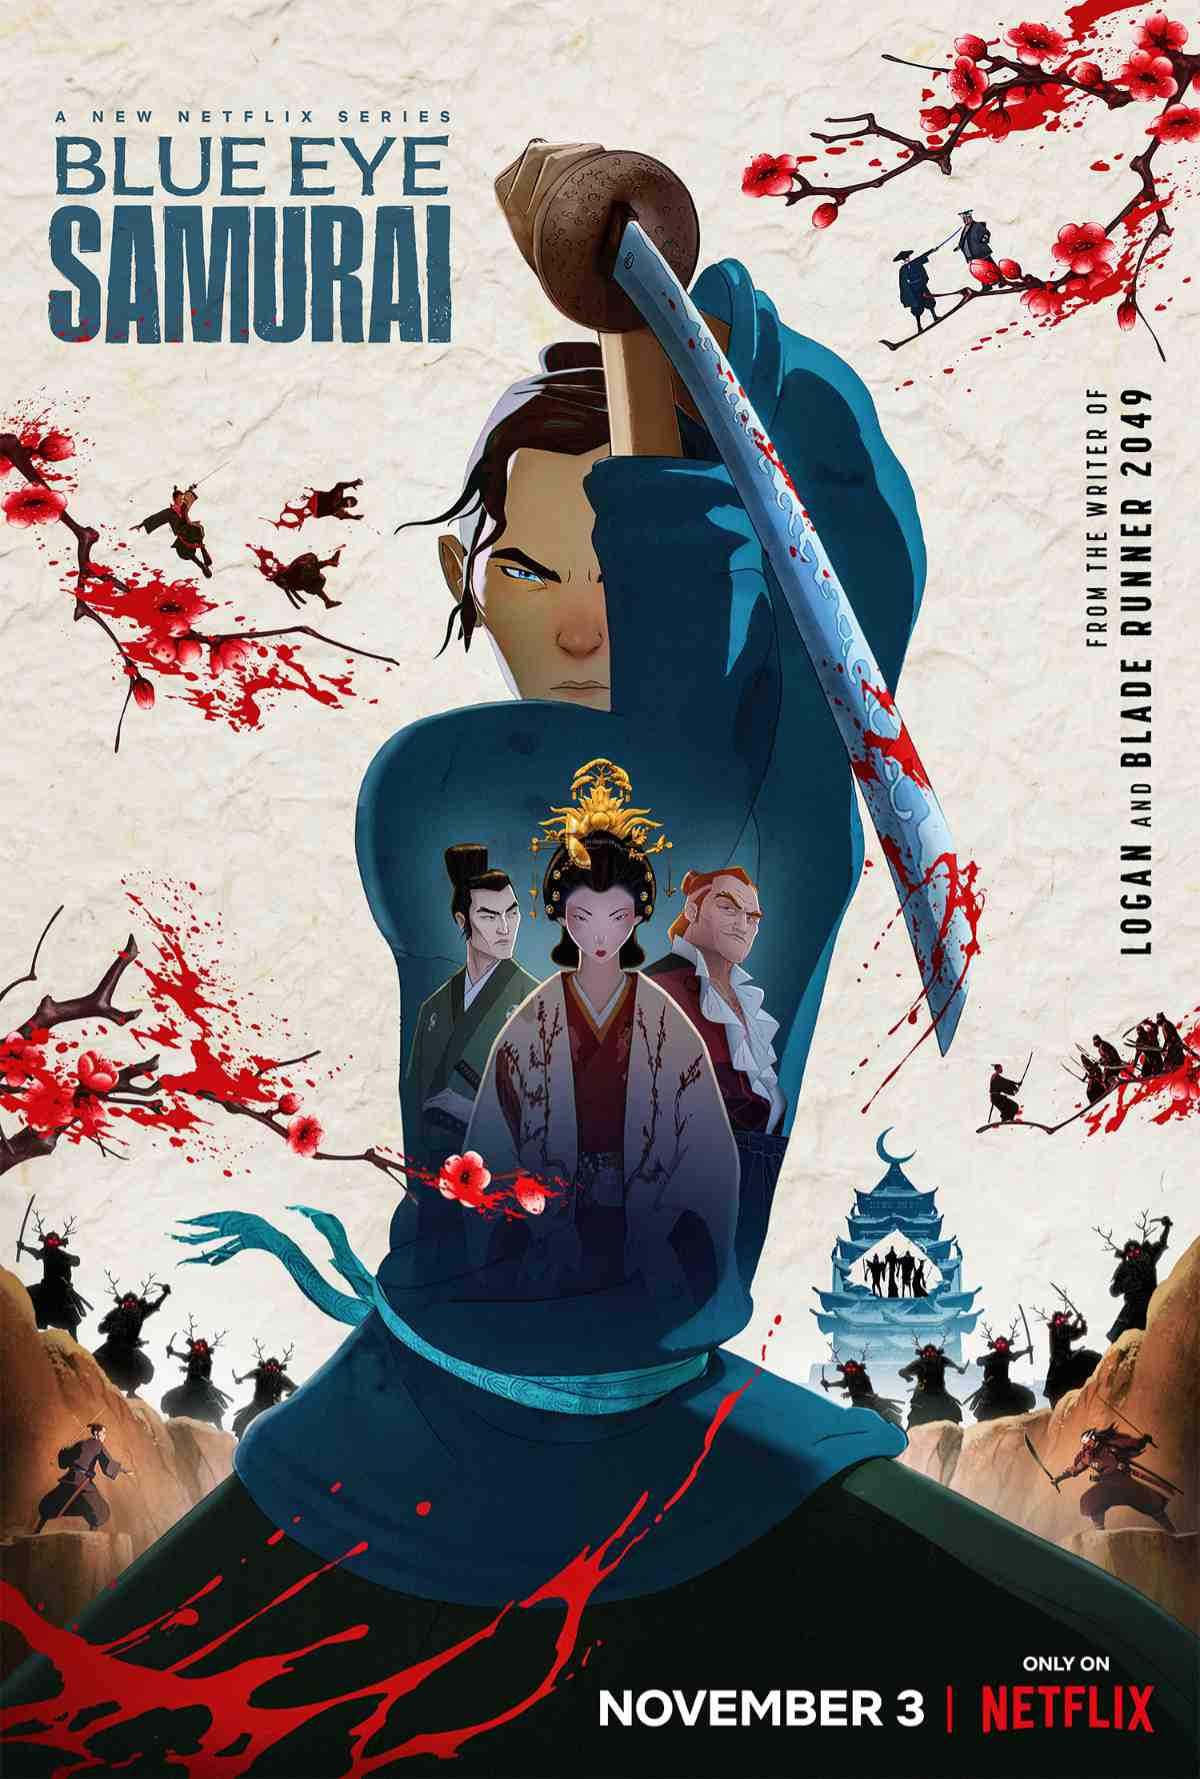 Blue Eye Samurai Trailer and Soundtrack Debut